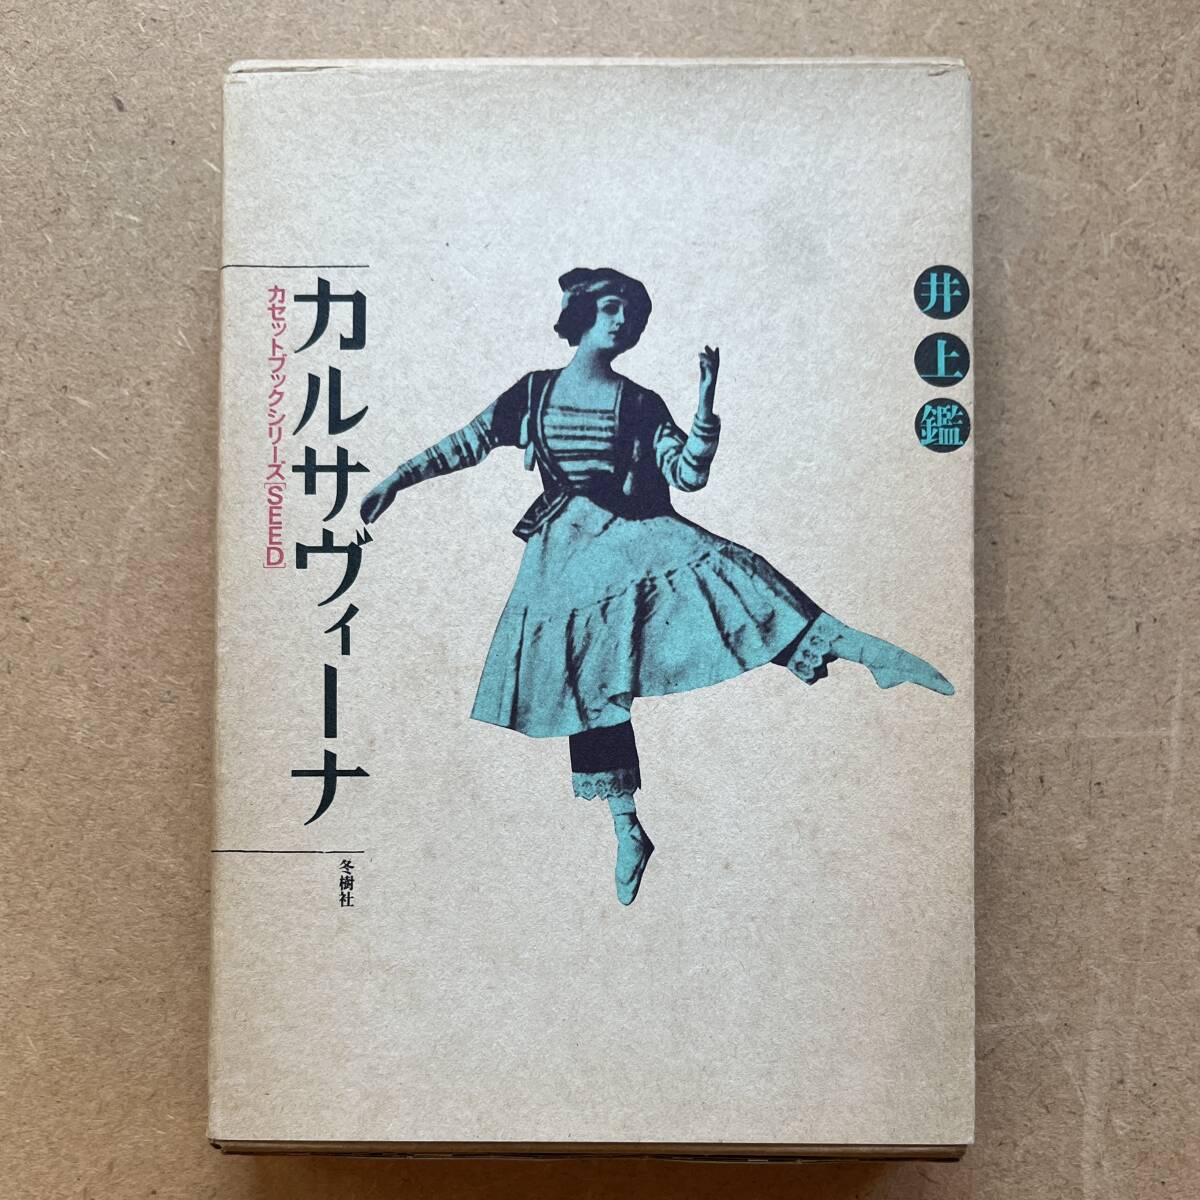 # редкостный! кассета книжка серии [SEED]# Inoue .Akira Inoue /karusa vi -na зима . фирма T-990961 эмбиент ni Gin лыжи * лента плесень иметь 